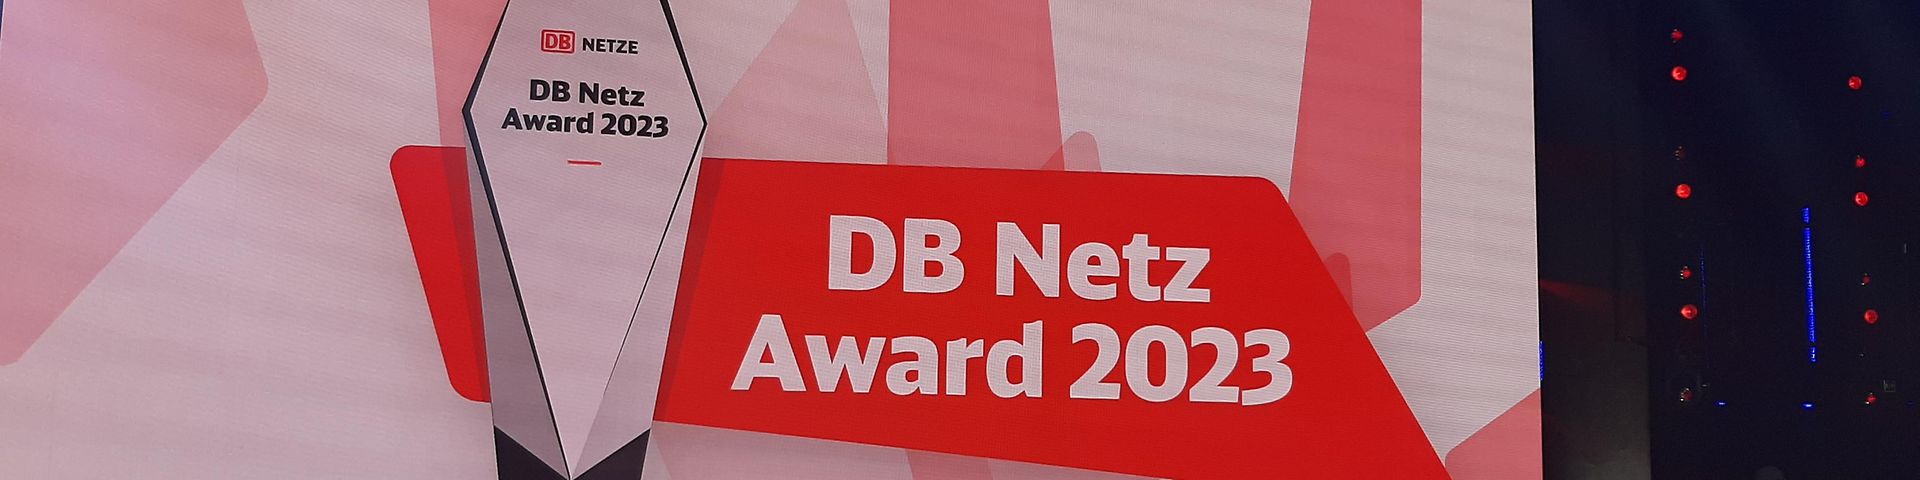 DB Netz Award 2023